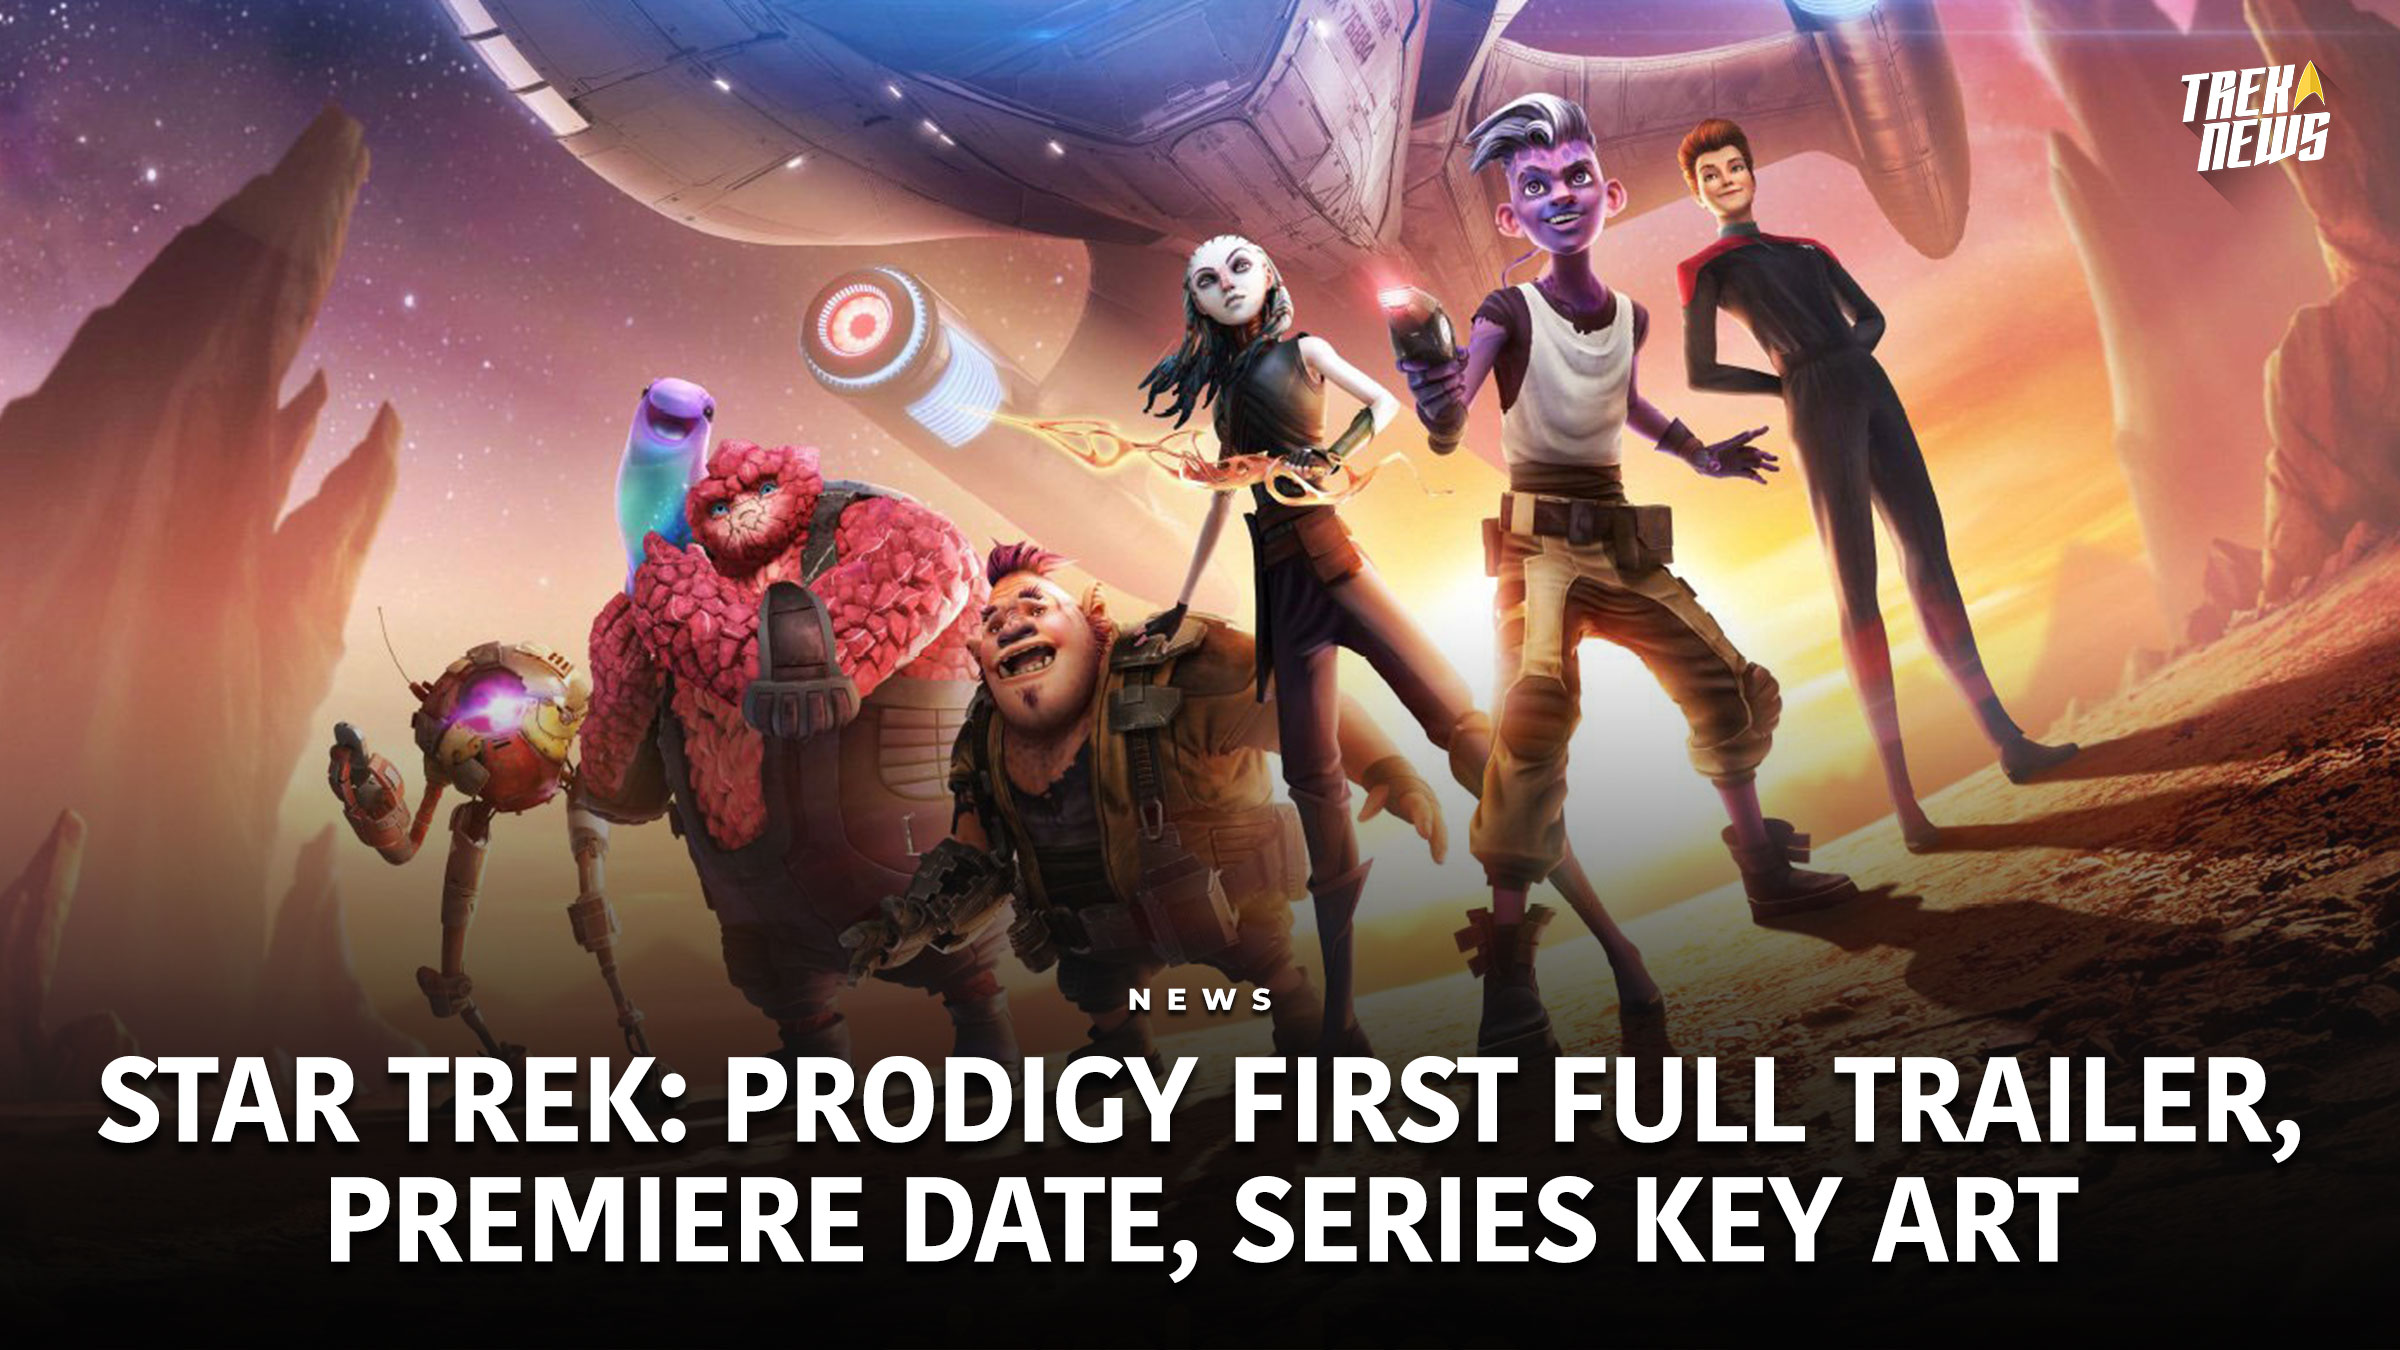 Star Trek: Prodigy First Full Trailer, Premiere Date, Series Key Art